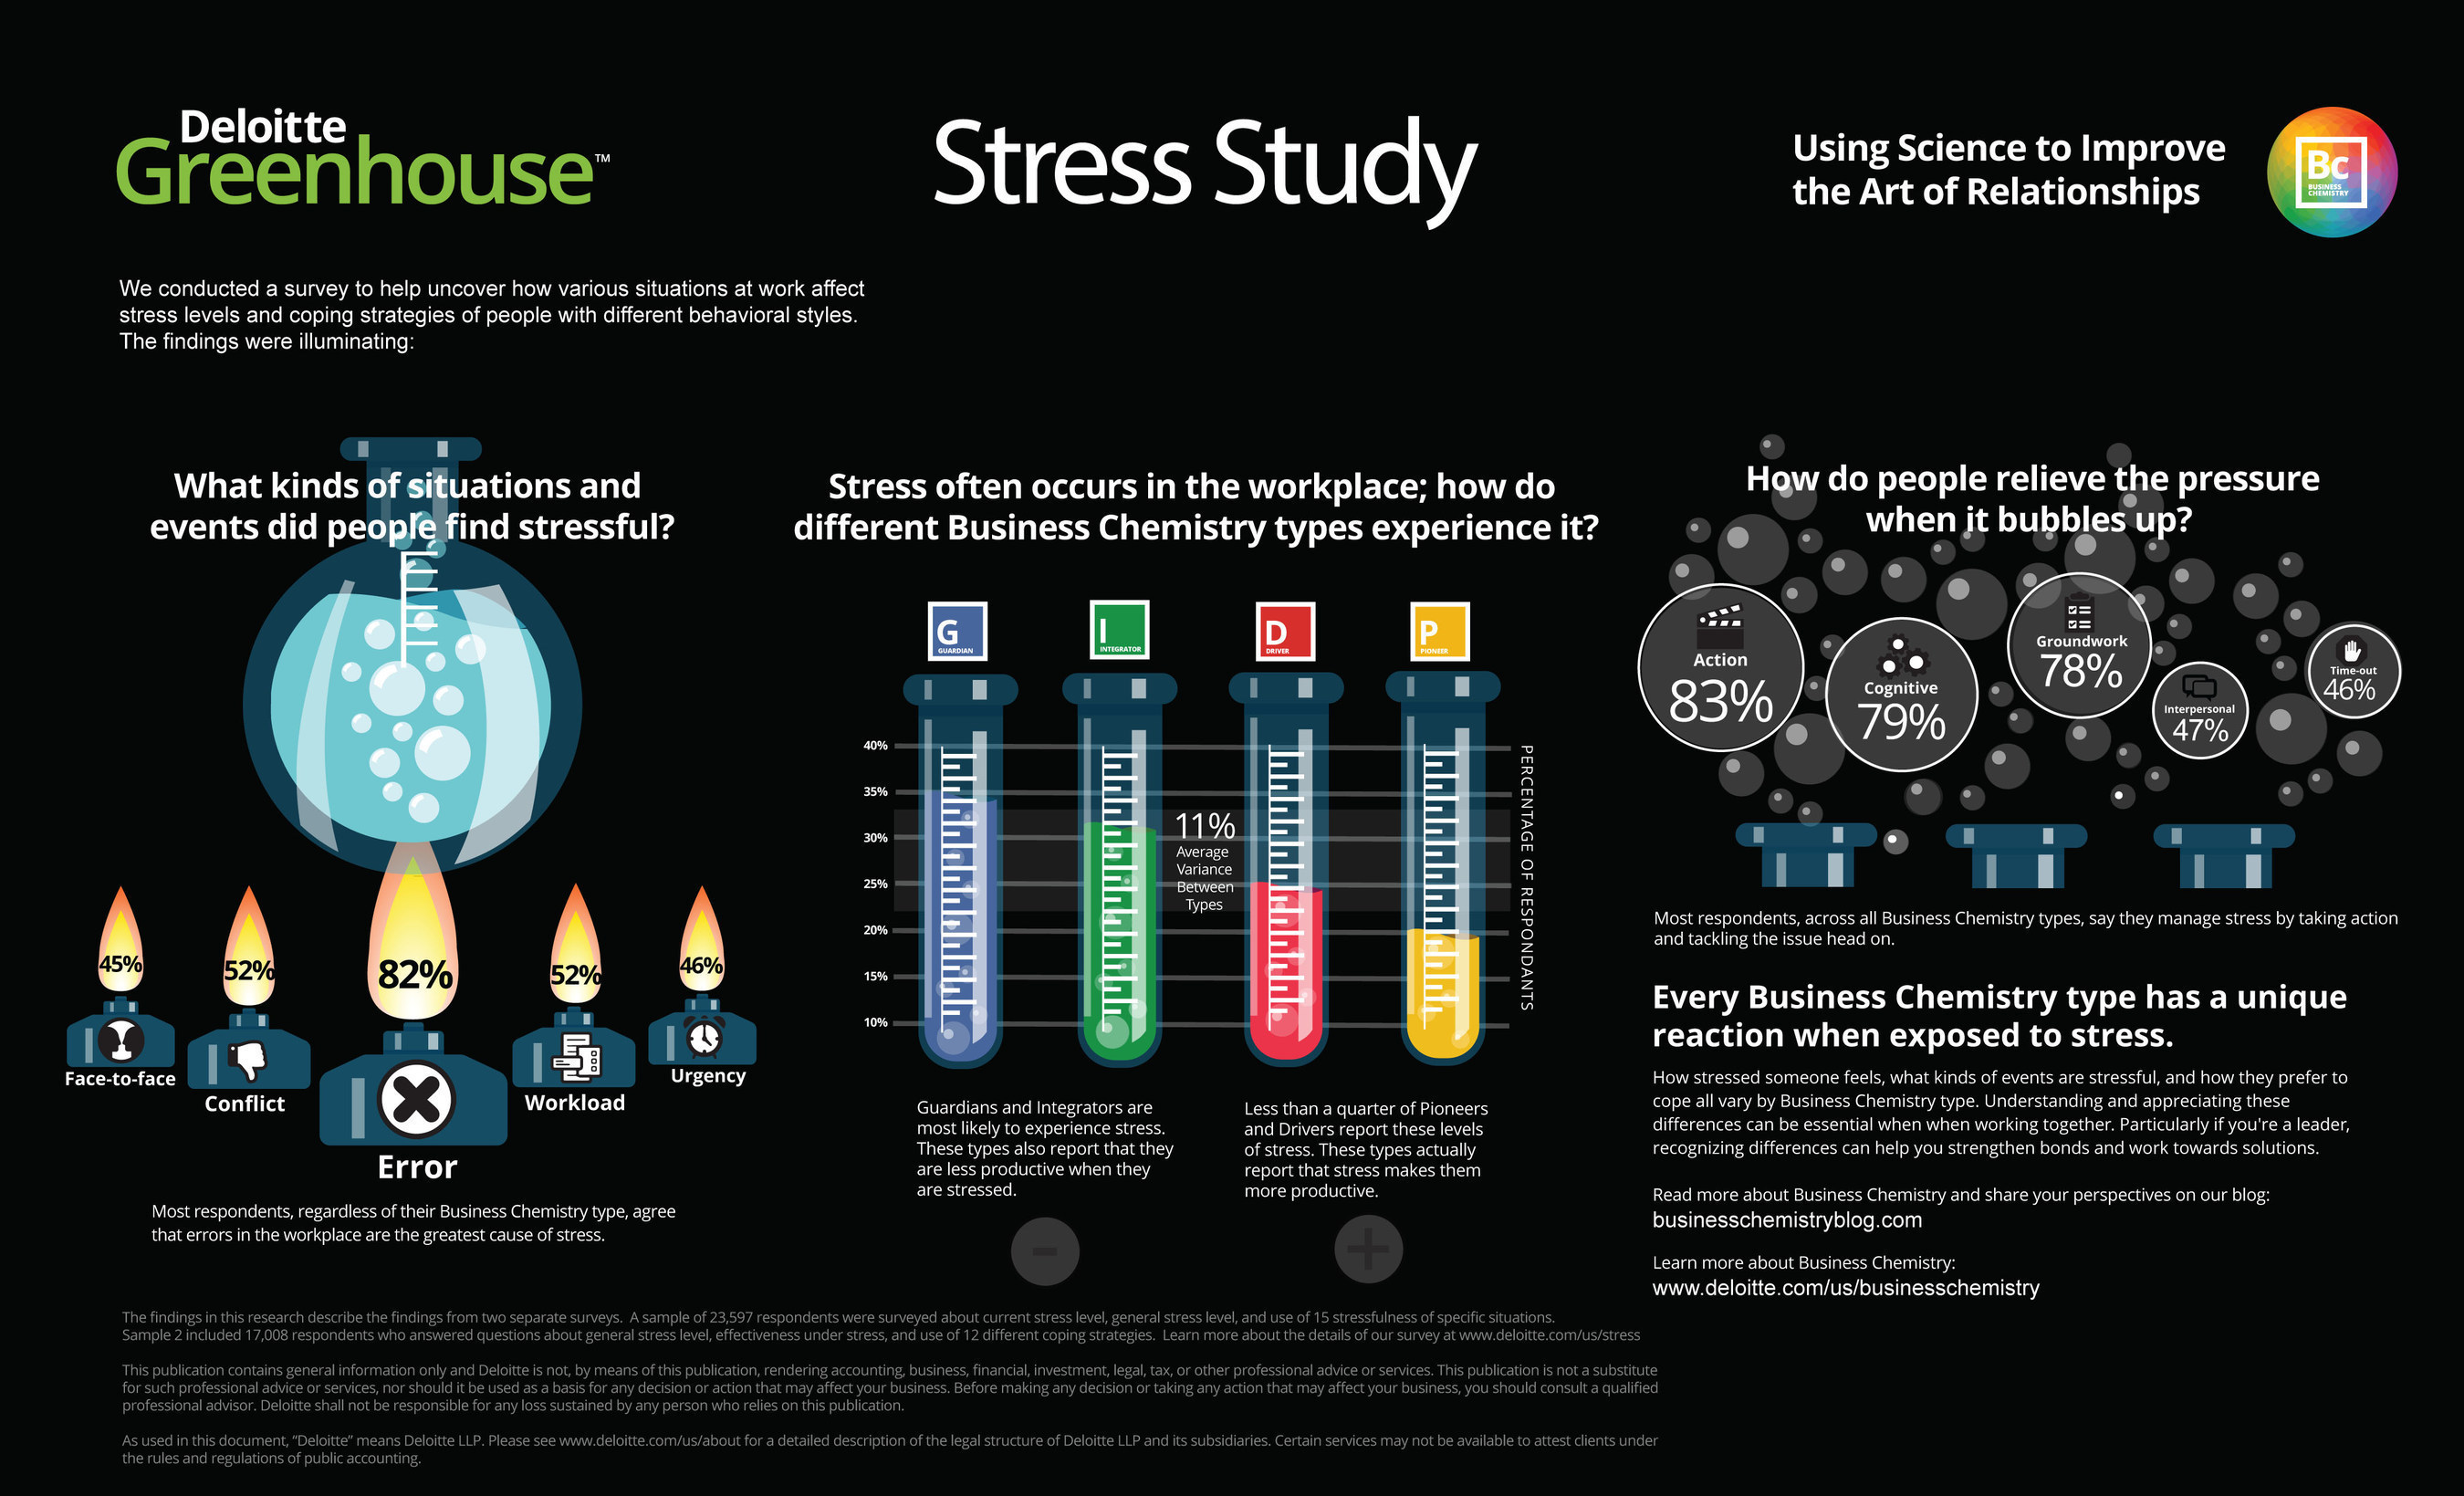 Deloitte Greenhouse(TM) Stress Study